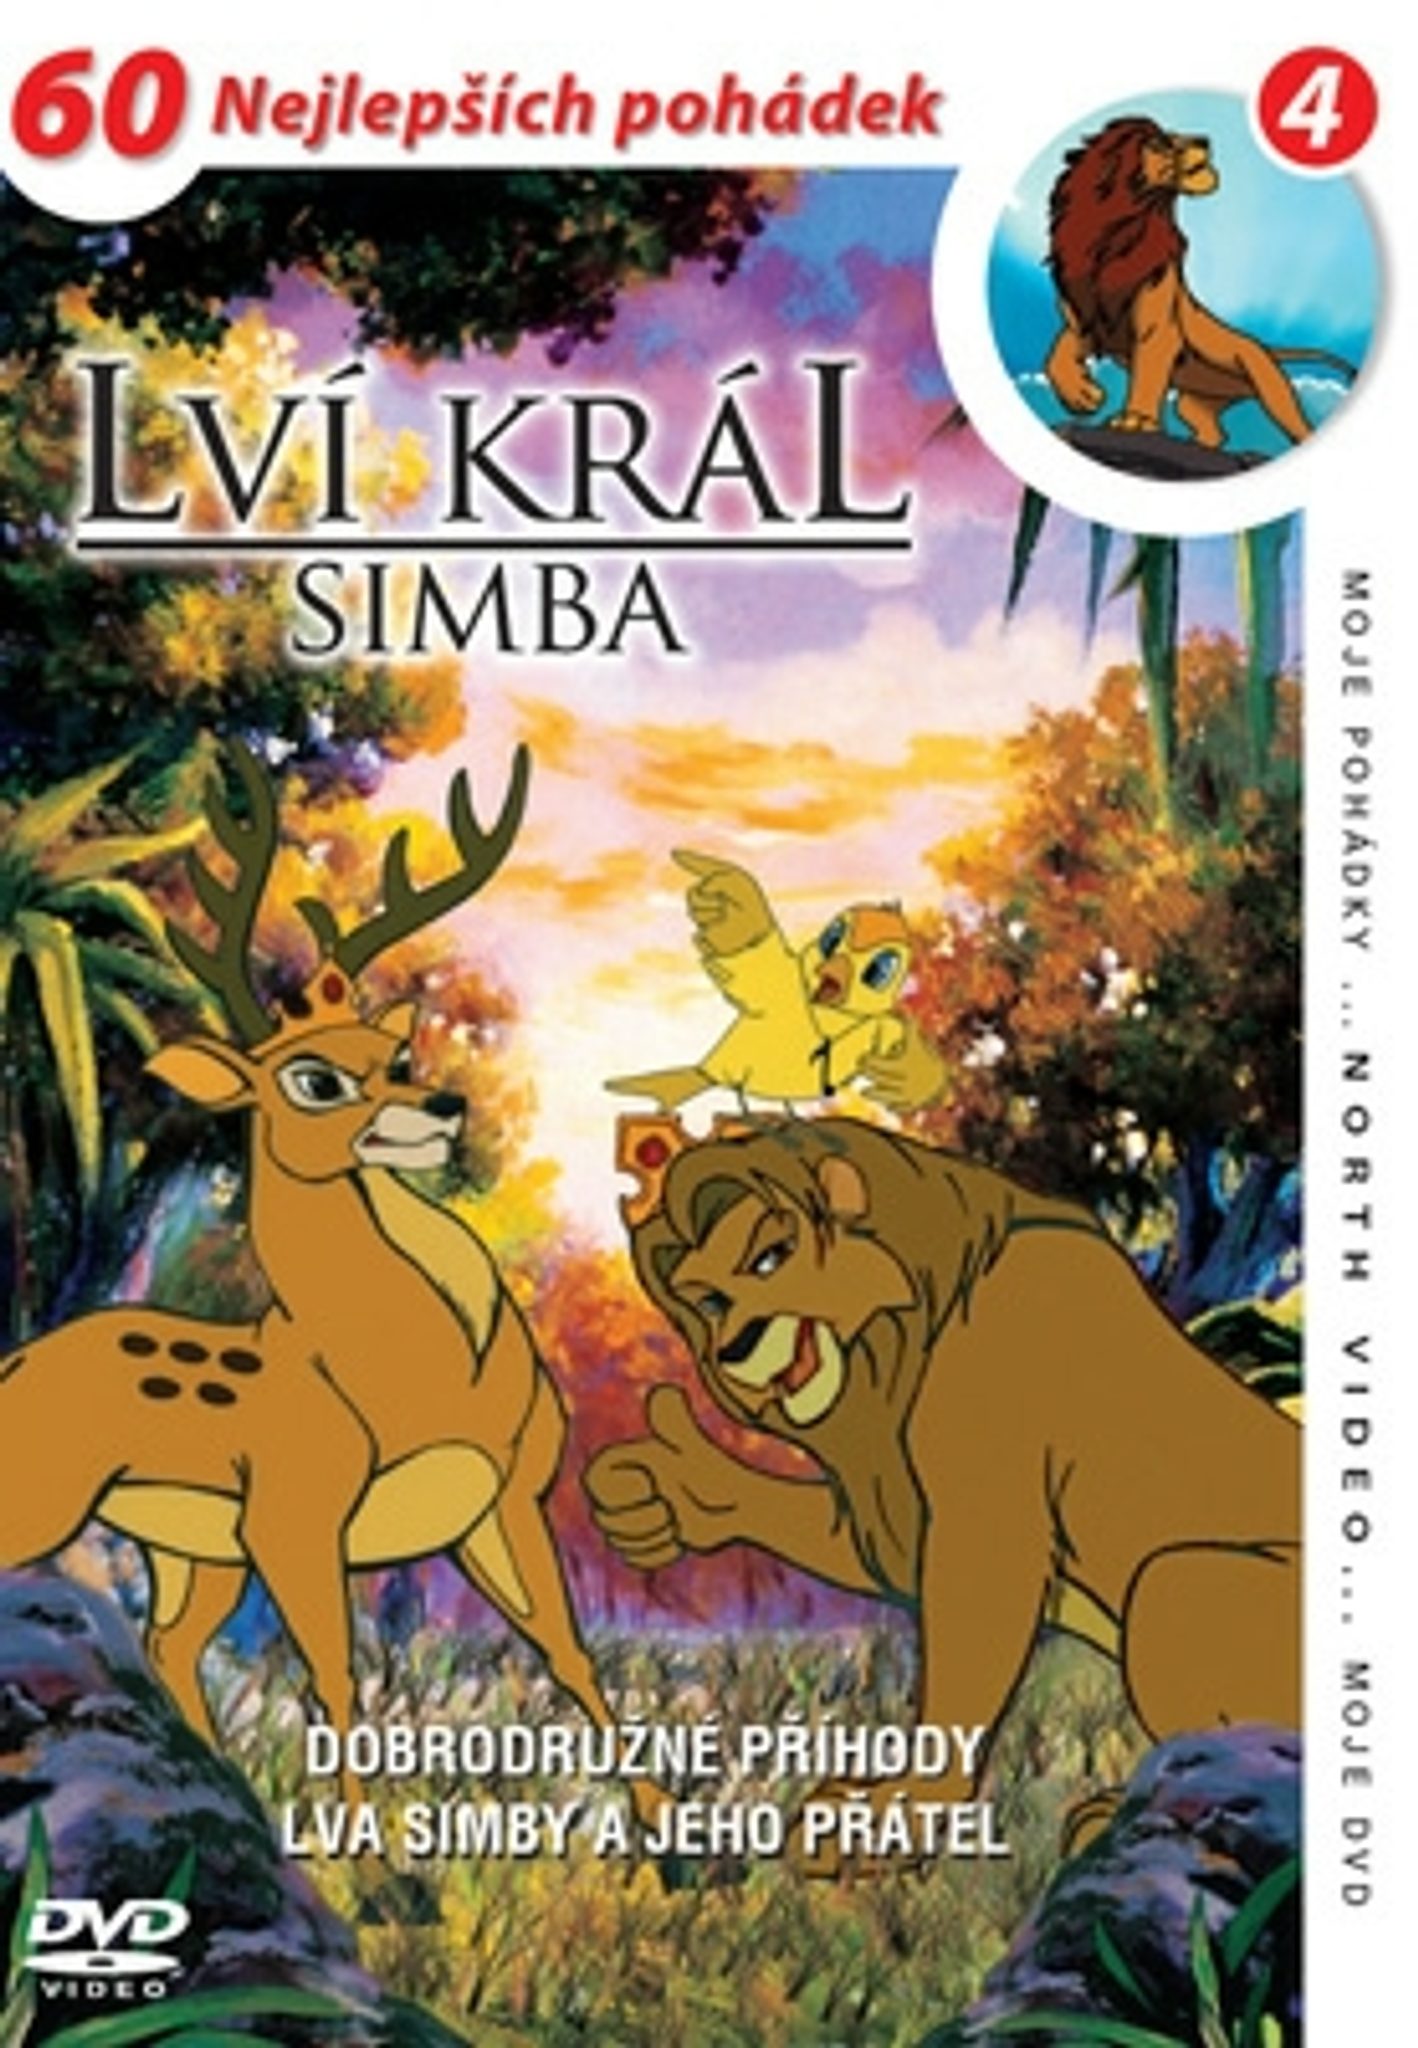 DVD Lv krl - Simba 04